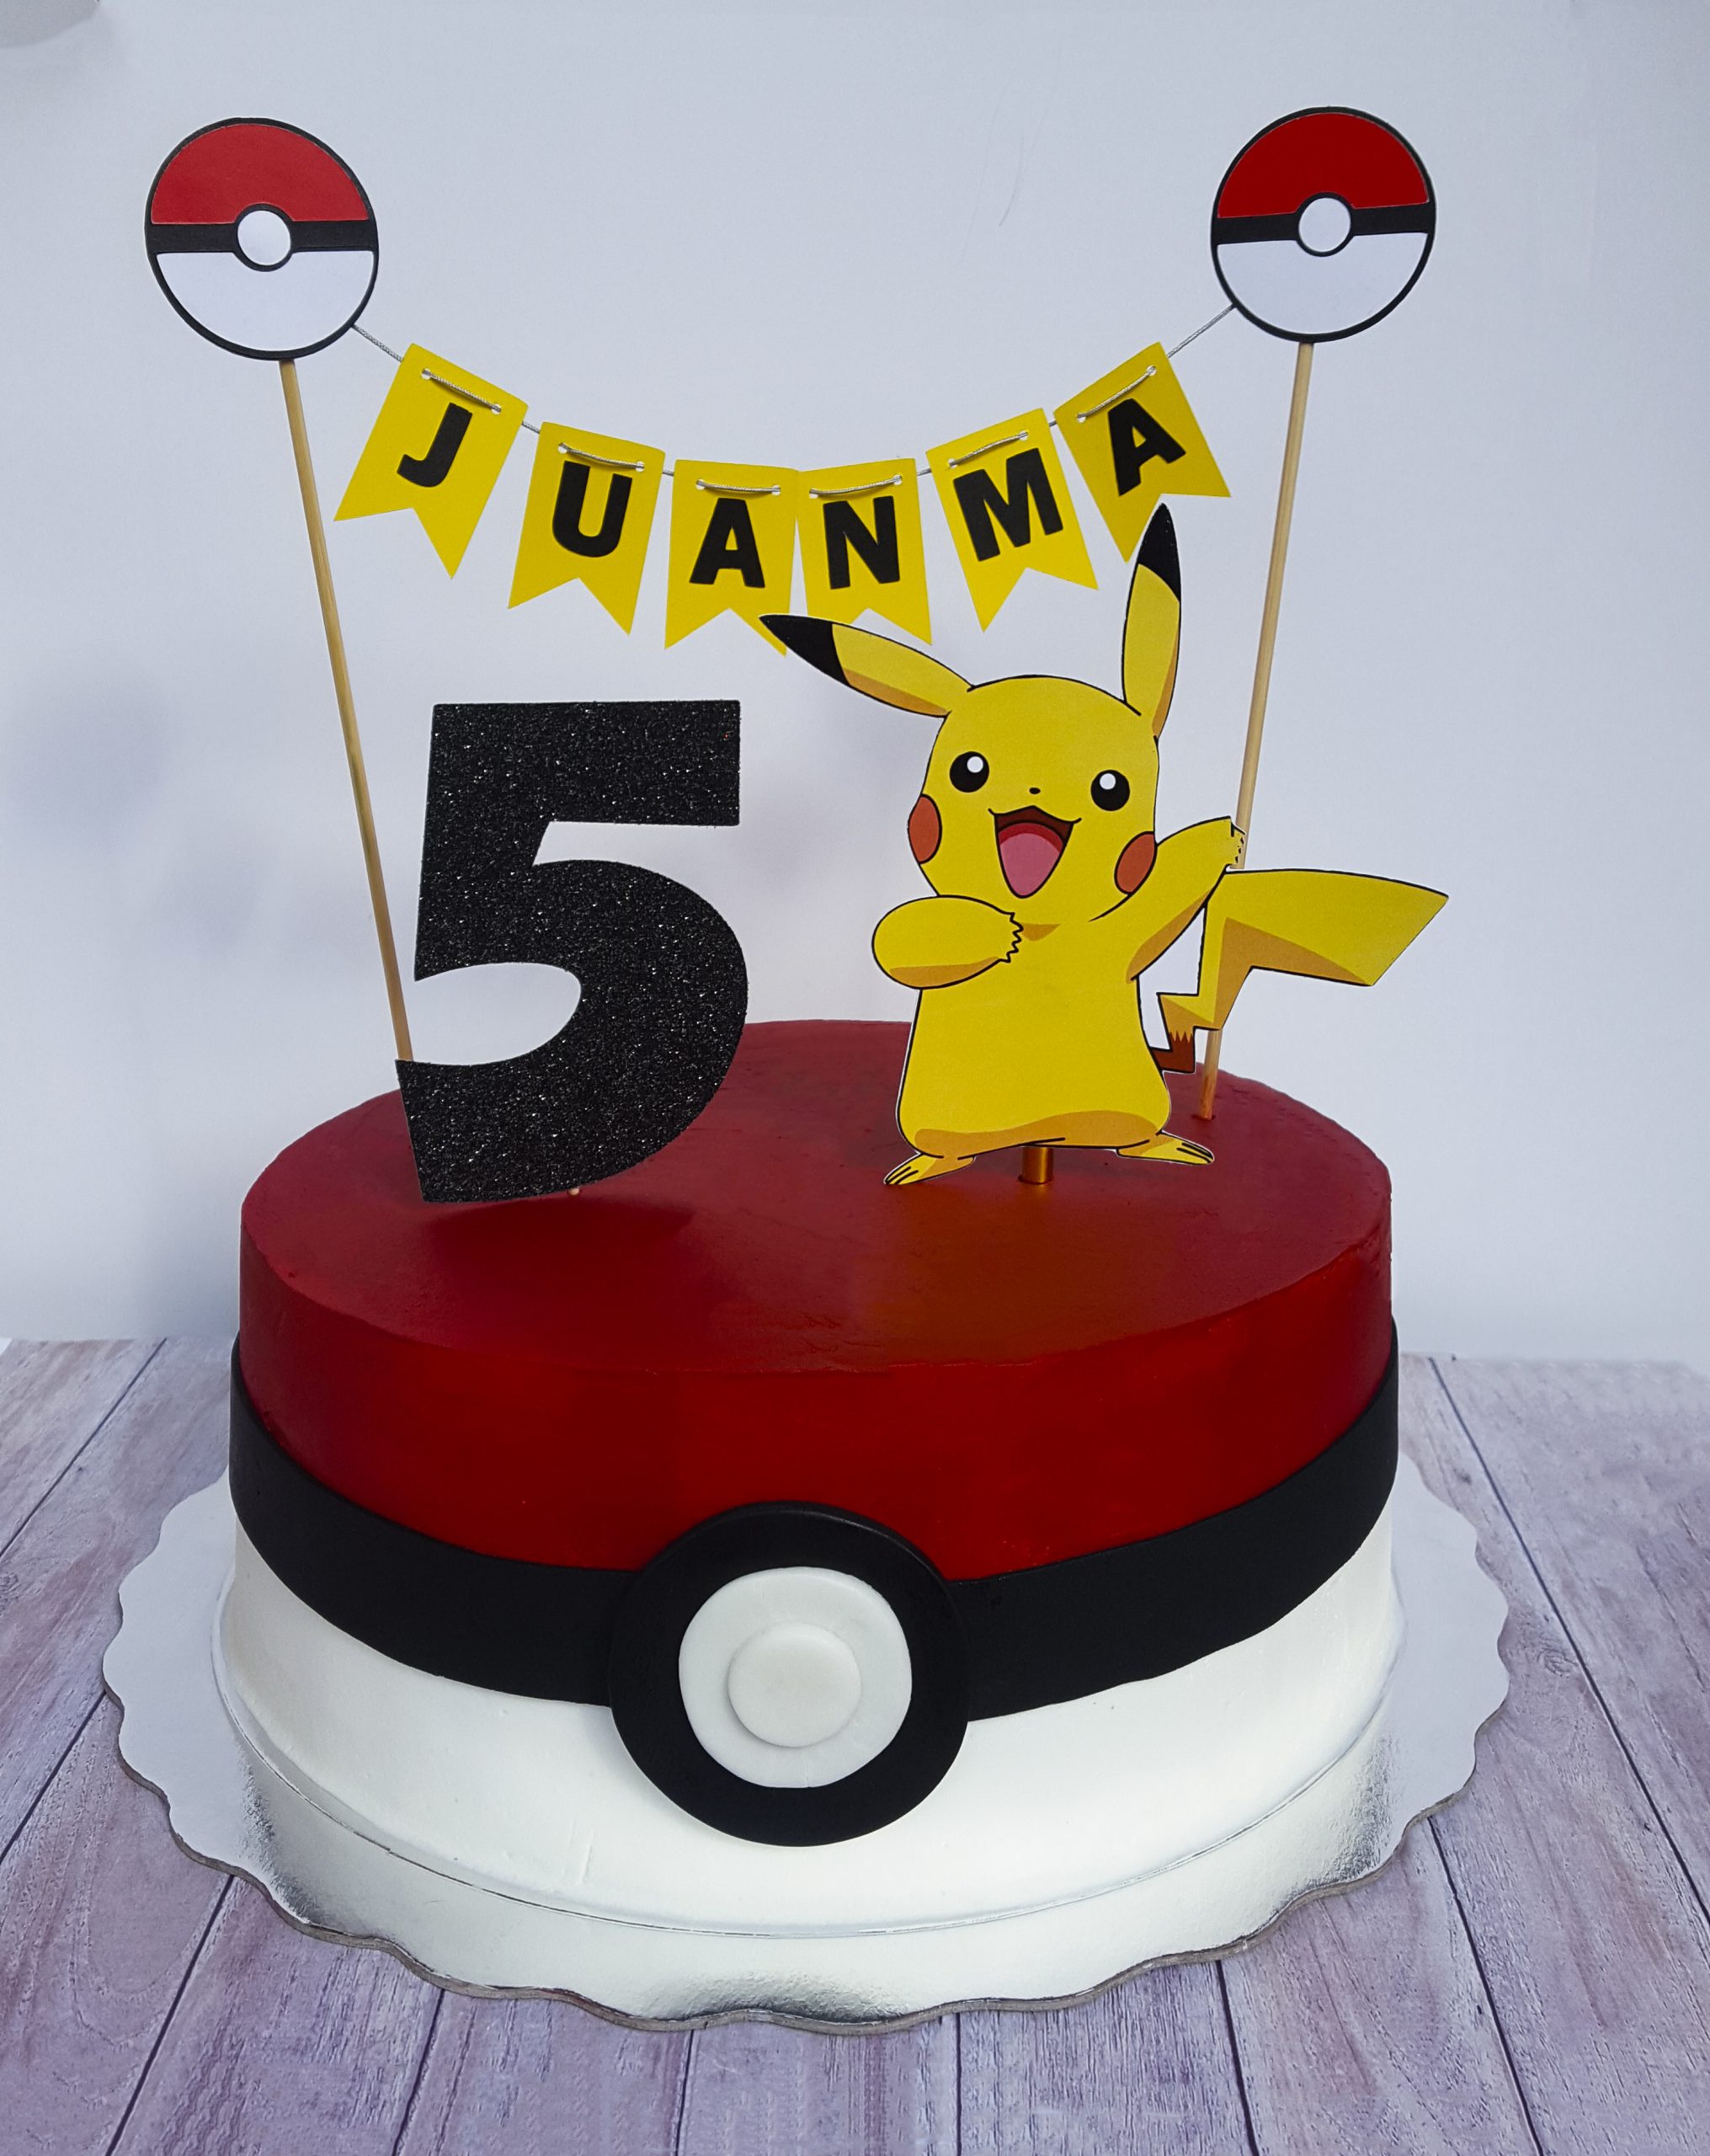 Personalizado Pokemon Cake Topper A4 Glaseado Hoja 8"dia Redondo imagen Inc Pastel lados